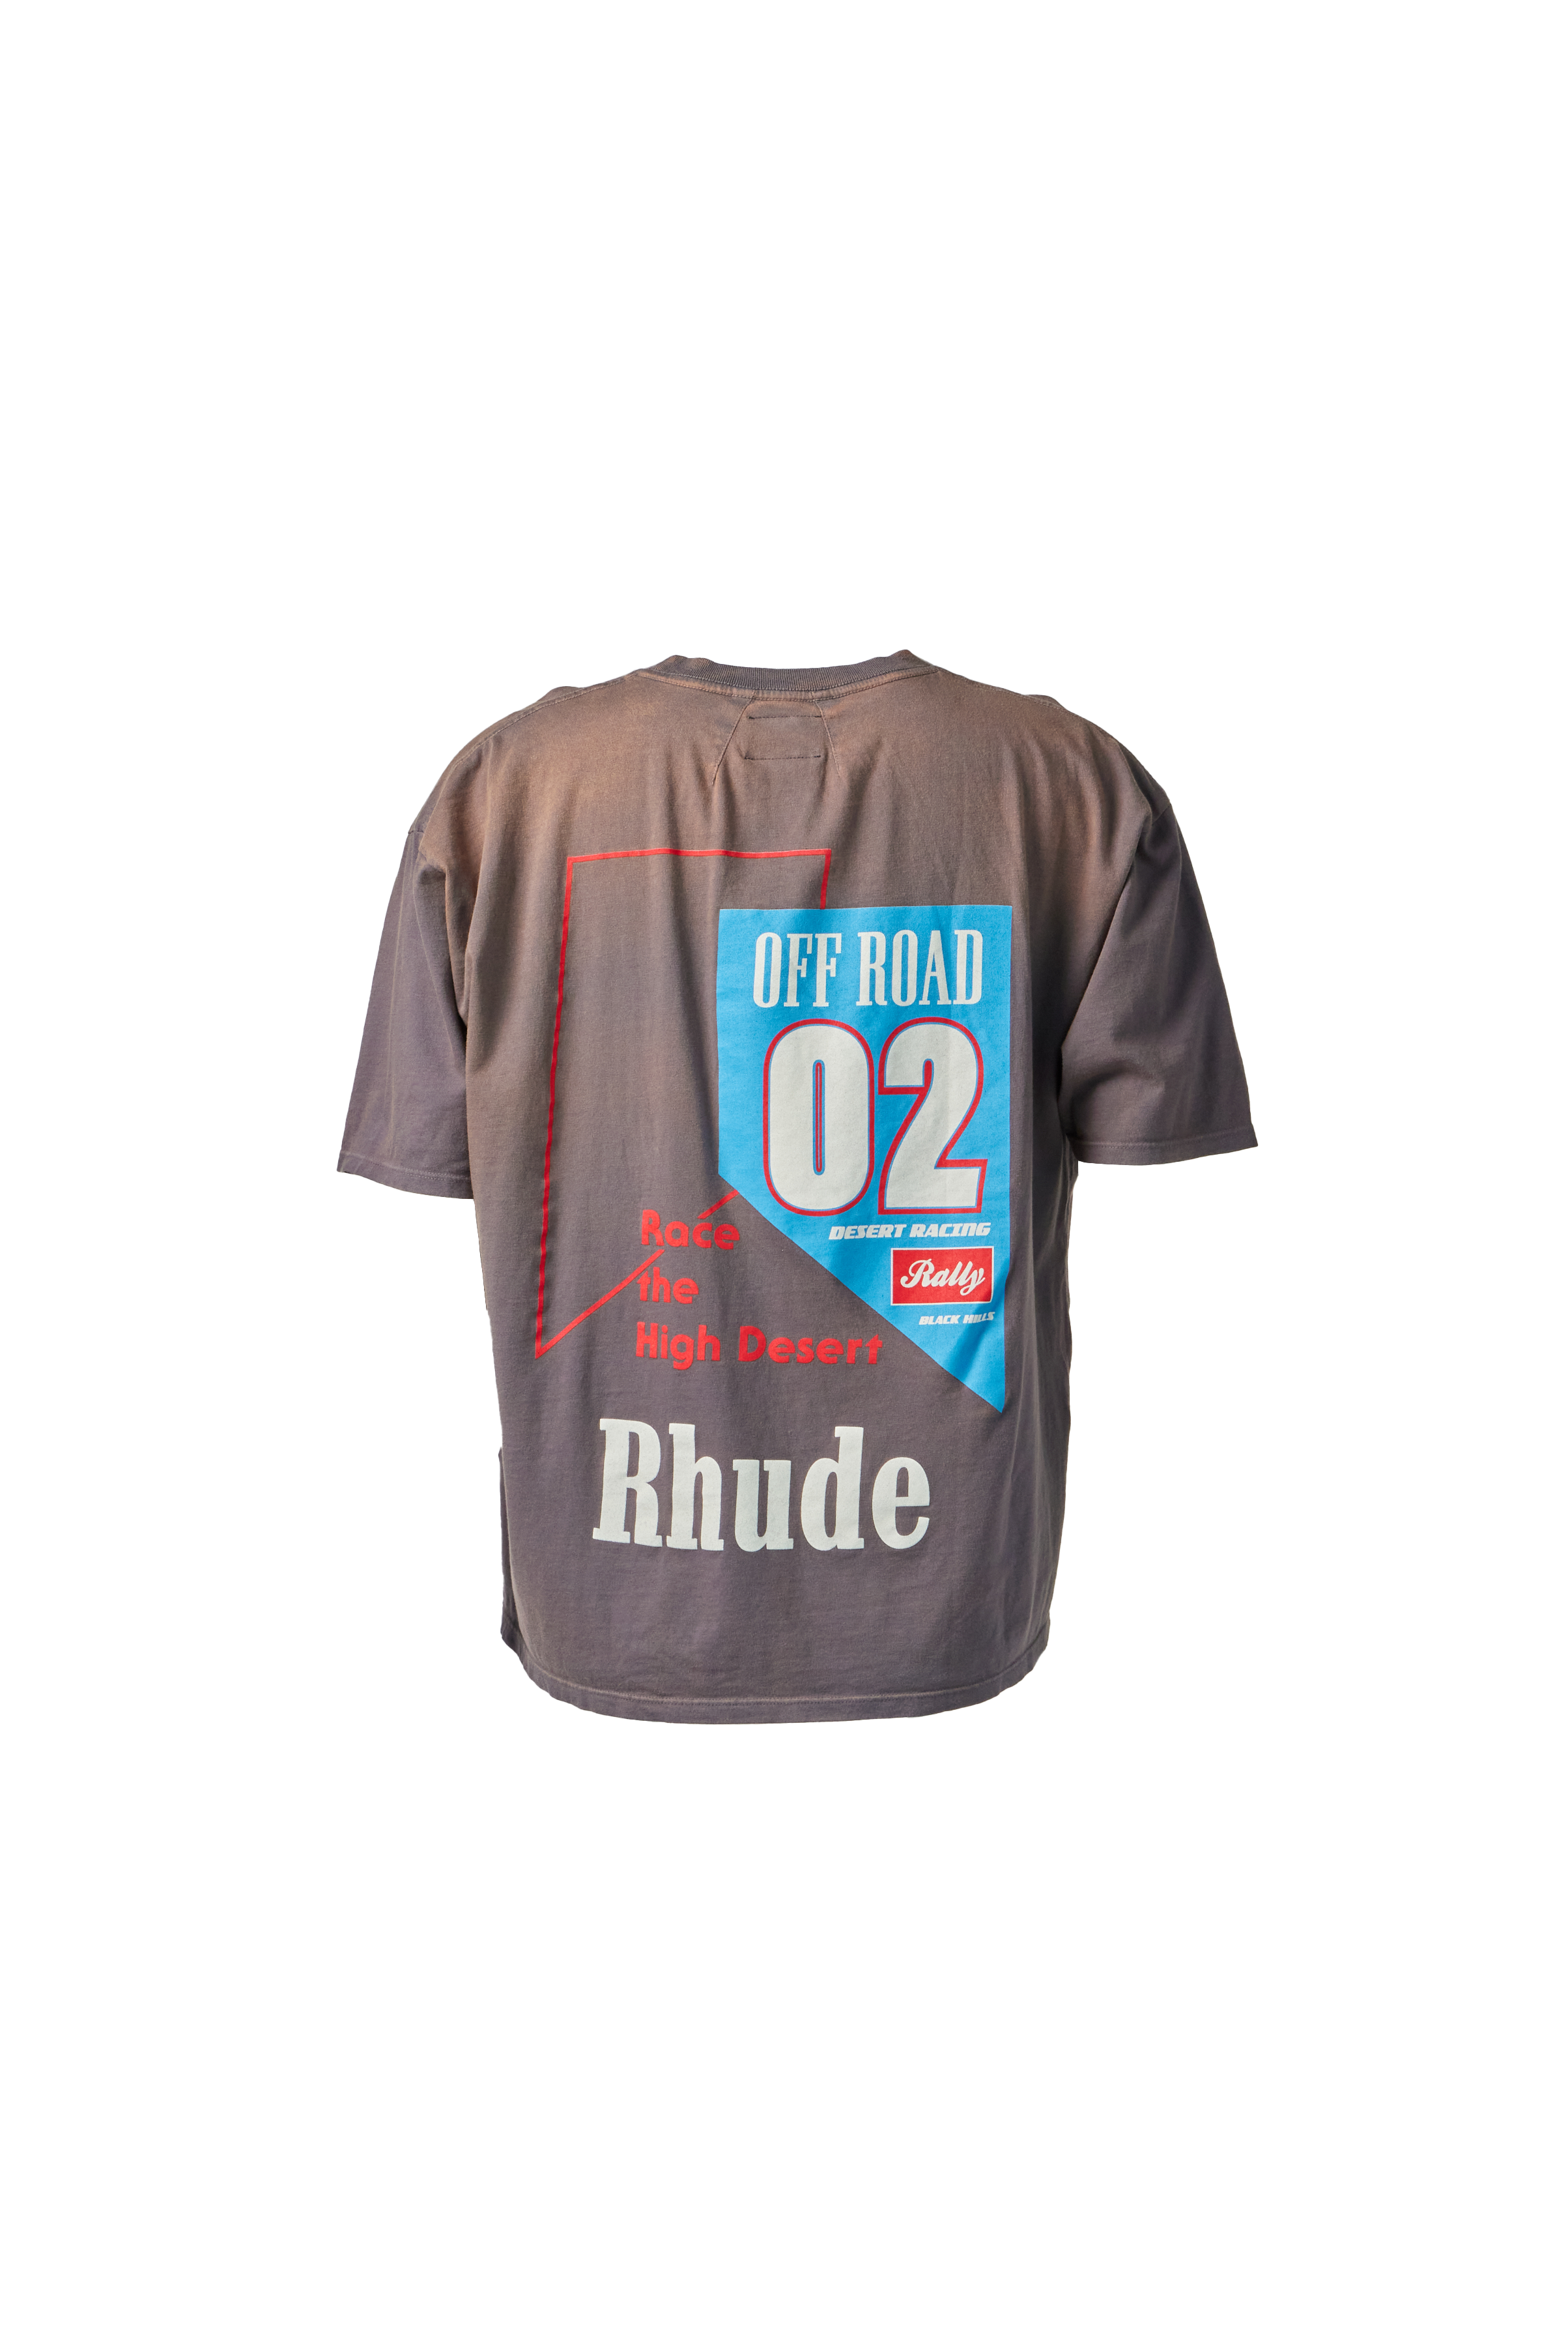 RHUDE - Rhude 02 Tee product image